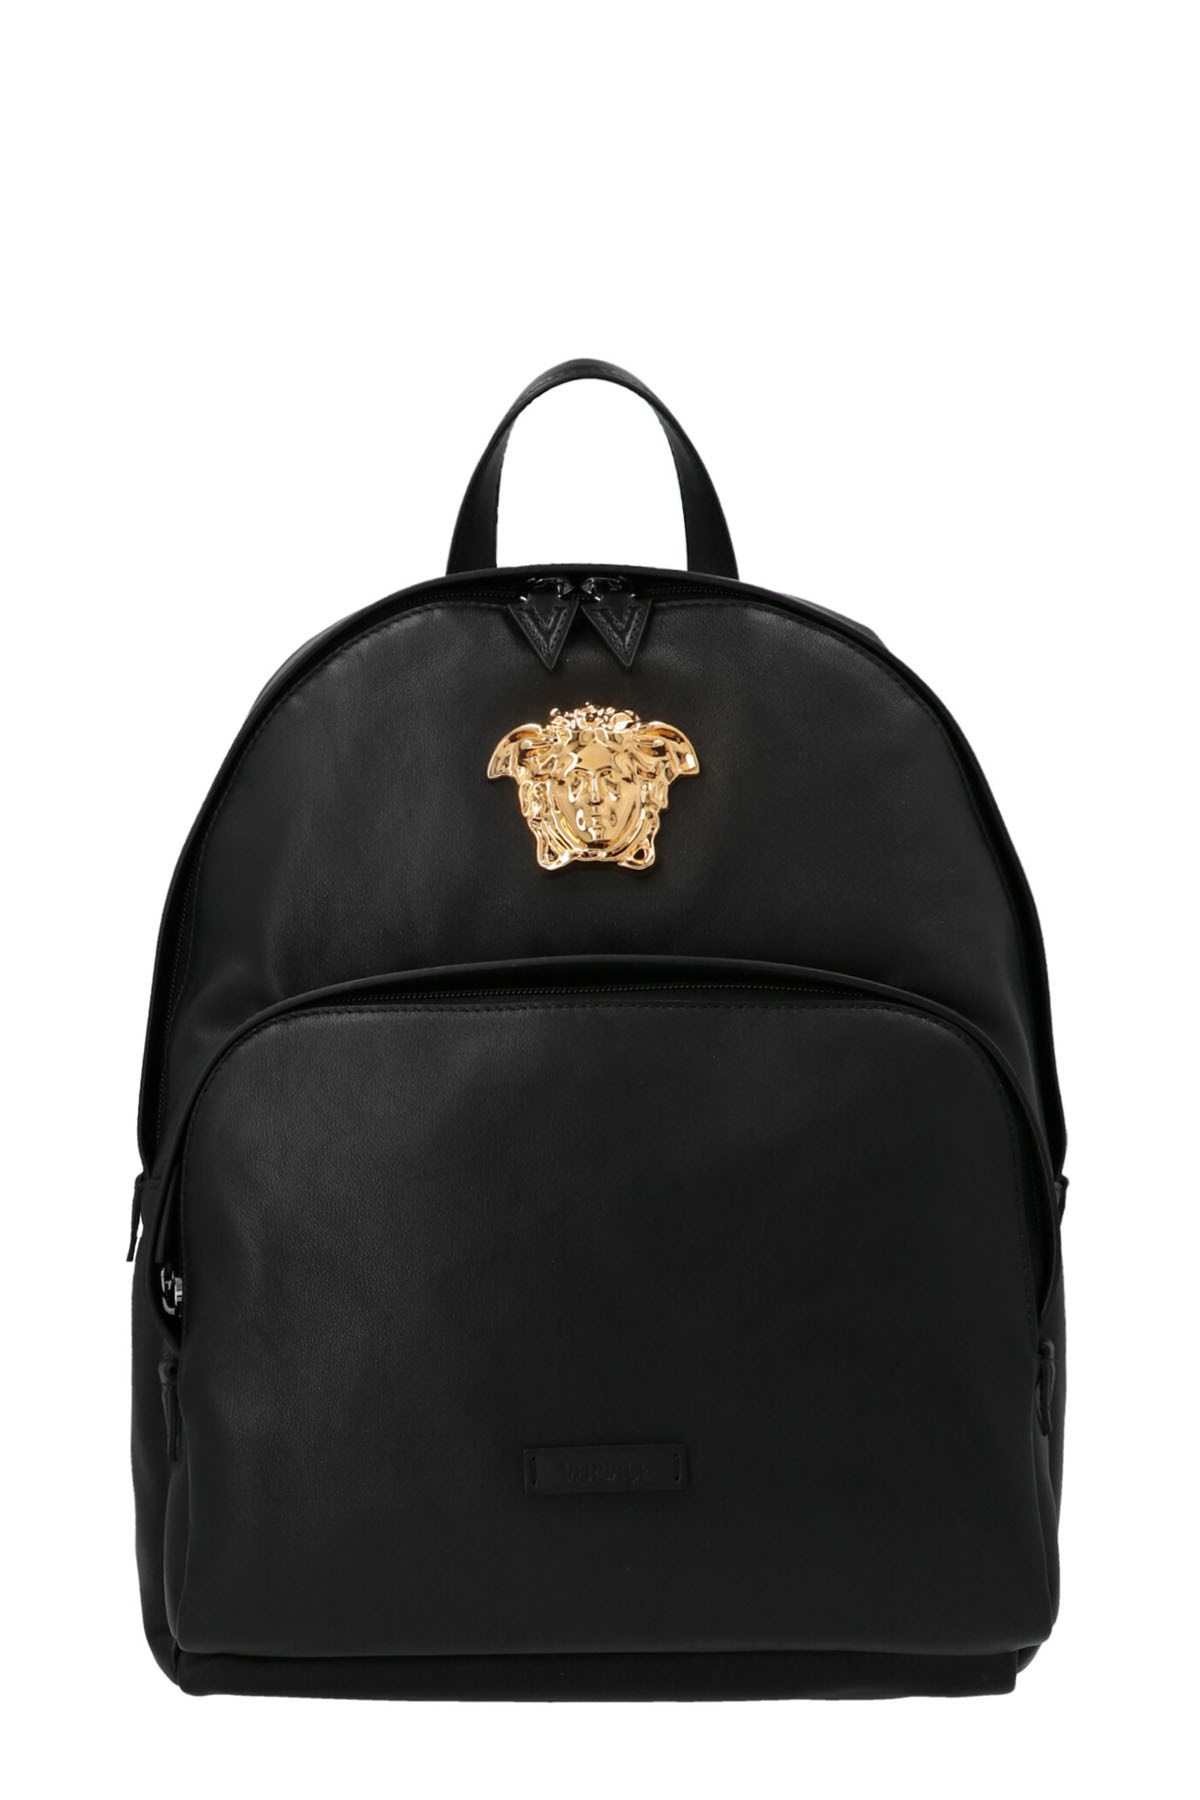 VERSACE 'Medusa' Leather Backpack